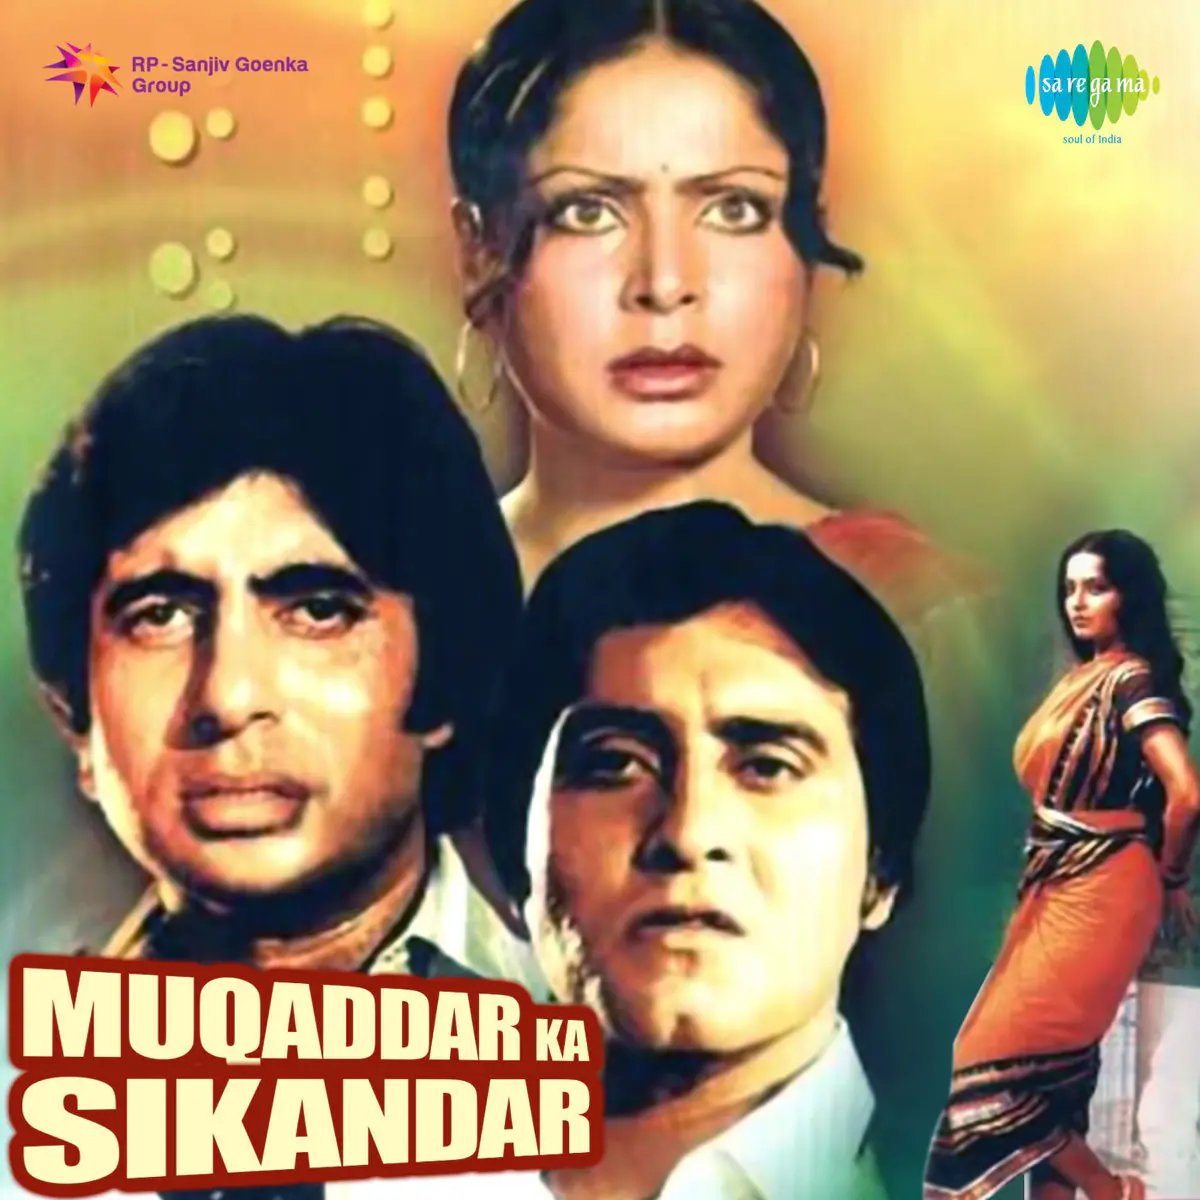 Muqaddar Ka Sikandar Songs Download Muqaddar Ka Sikandar Mp3 Songs Online Free On Gaana Com